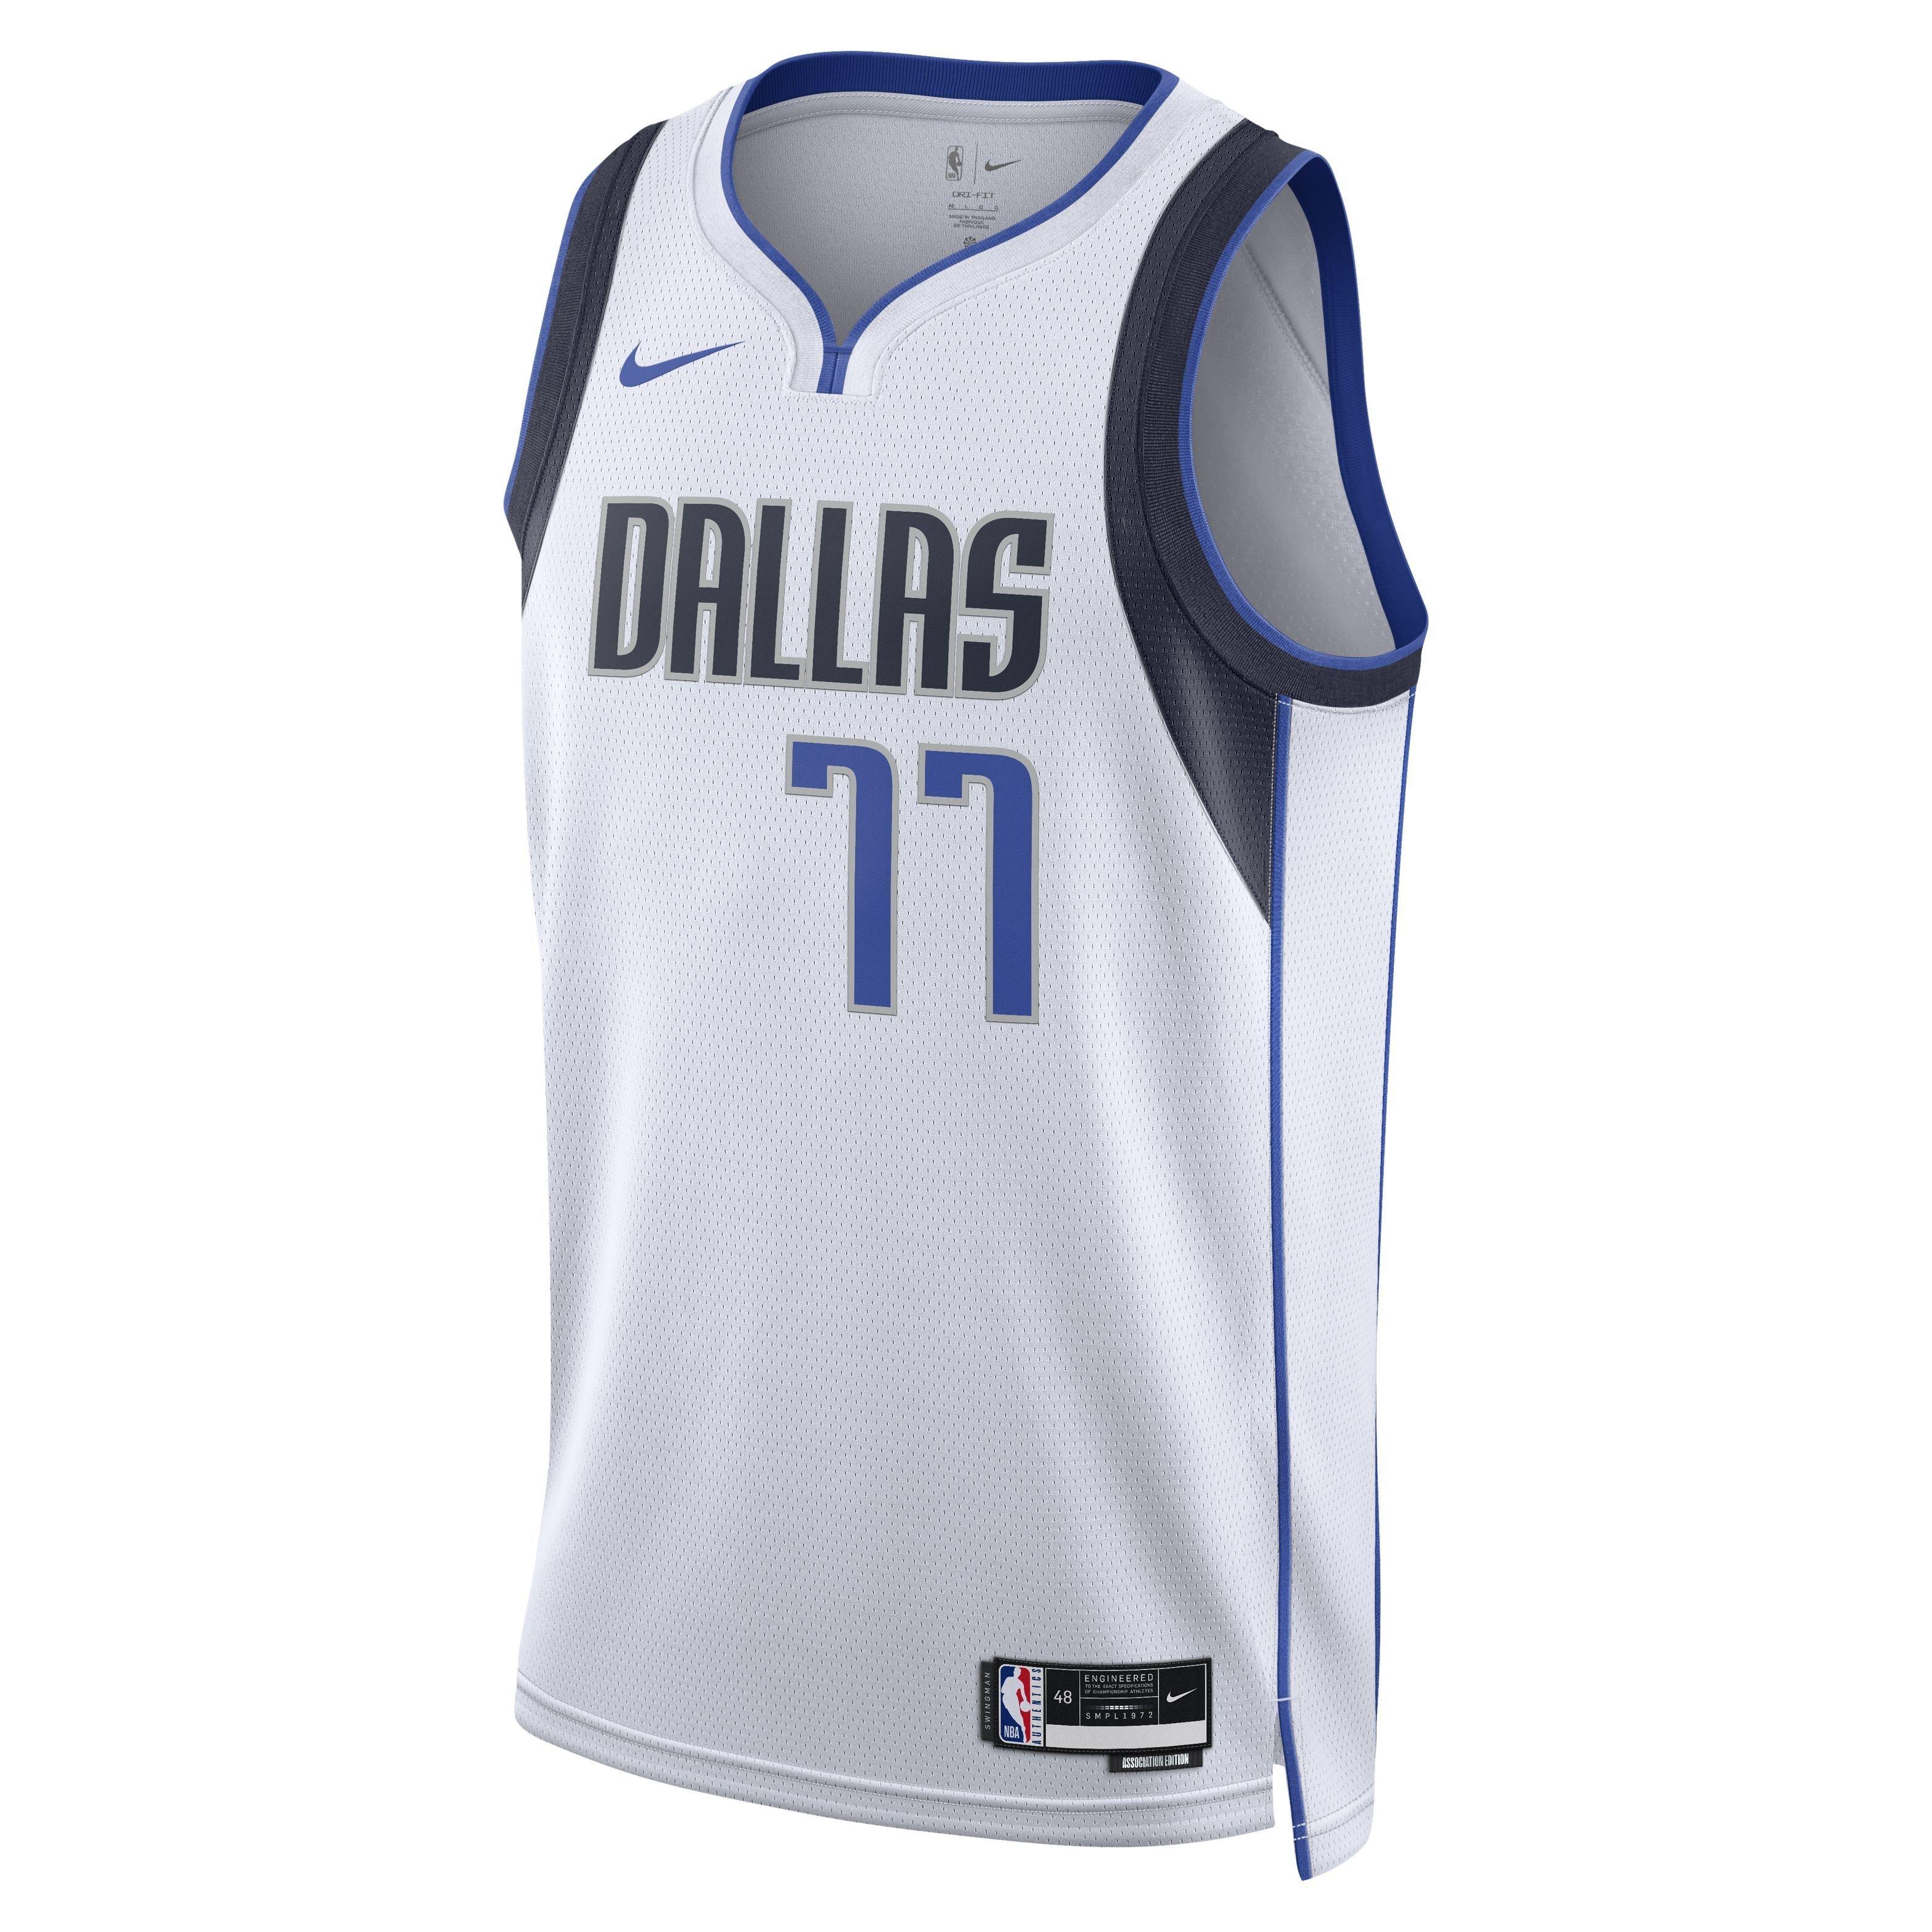 NWT Dallas Mavericks Luka Doncic Limited Edition Nike Dri-FIT Jersey Size L